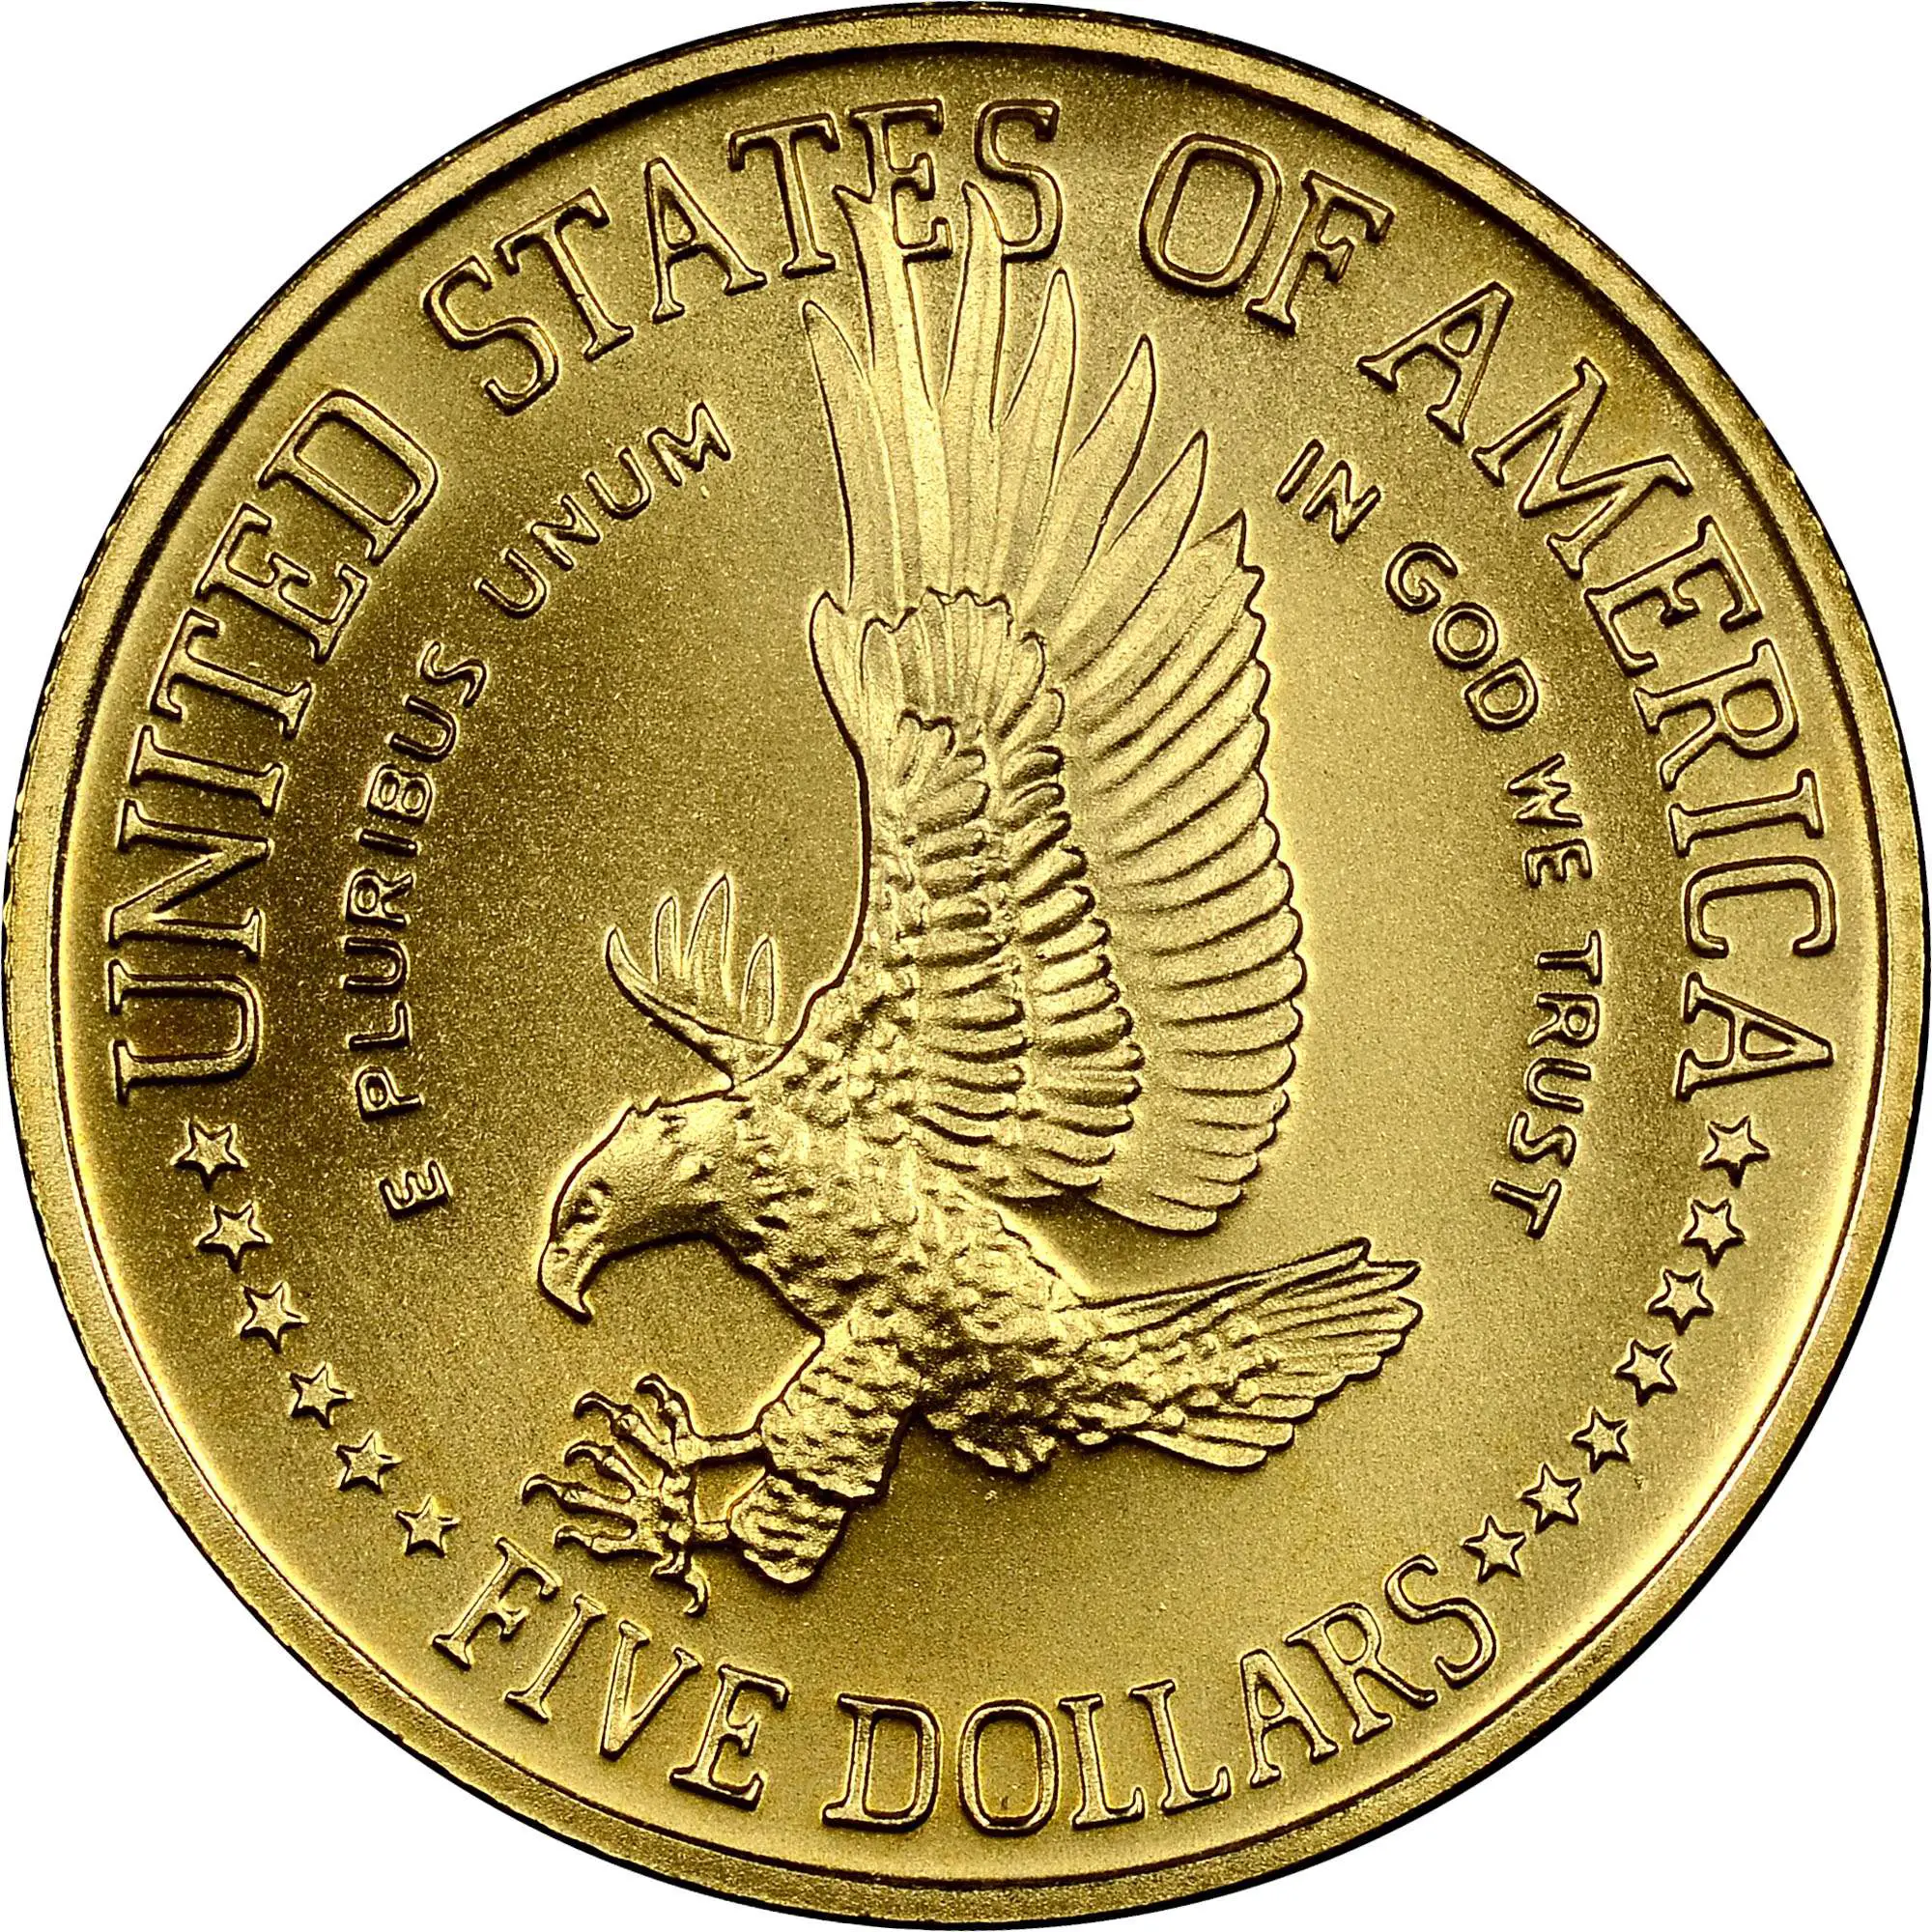 U.S. Gold Coin Melt Values